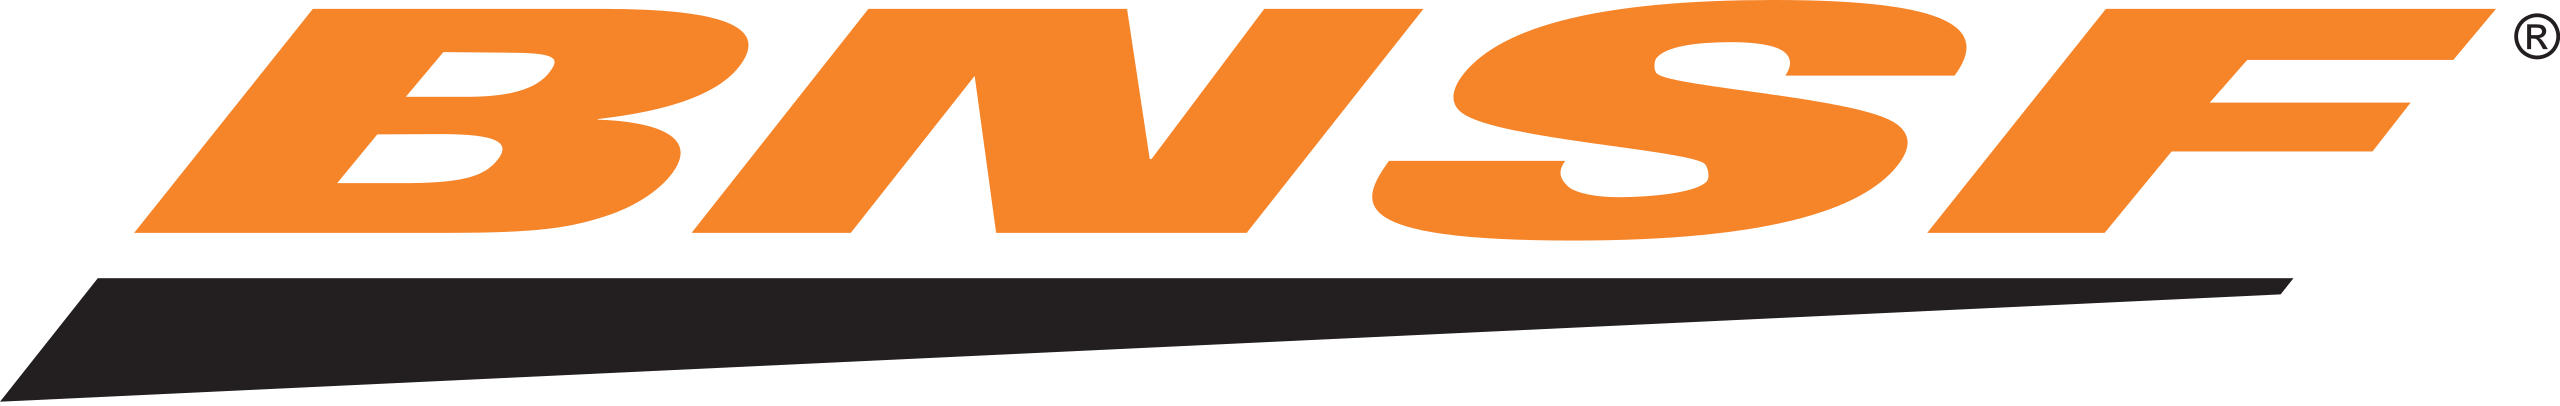 File:BNSF logo.svg - Wikipedia